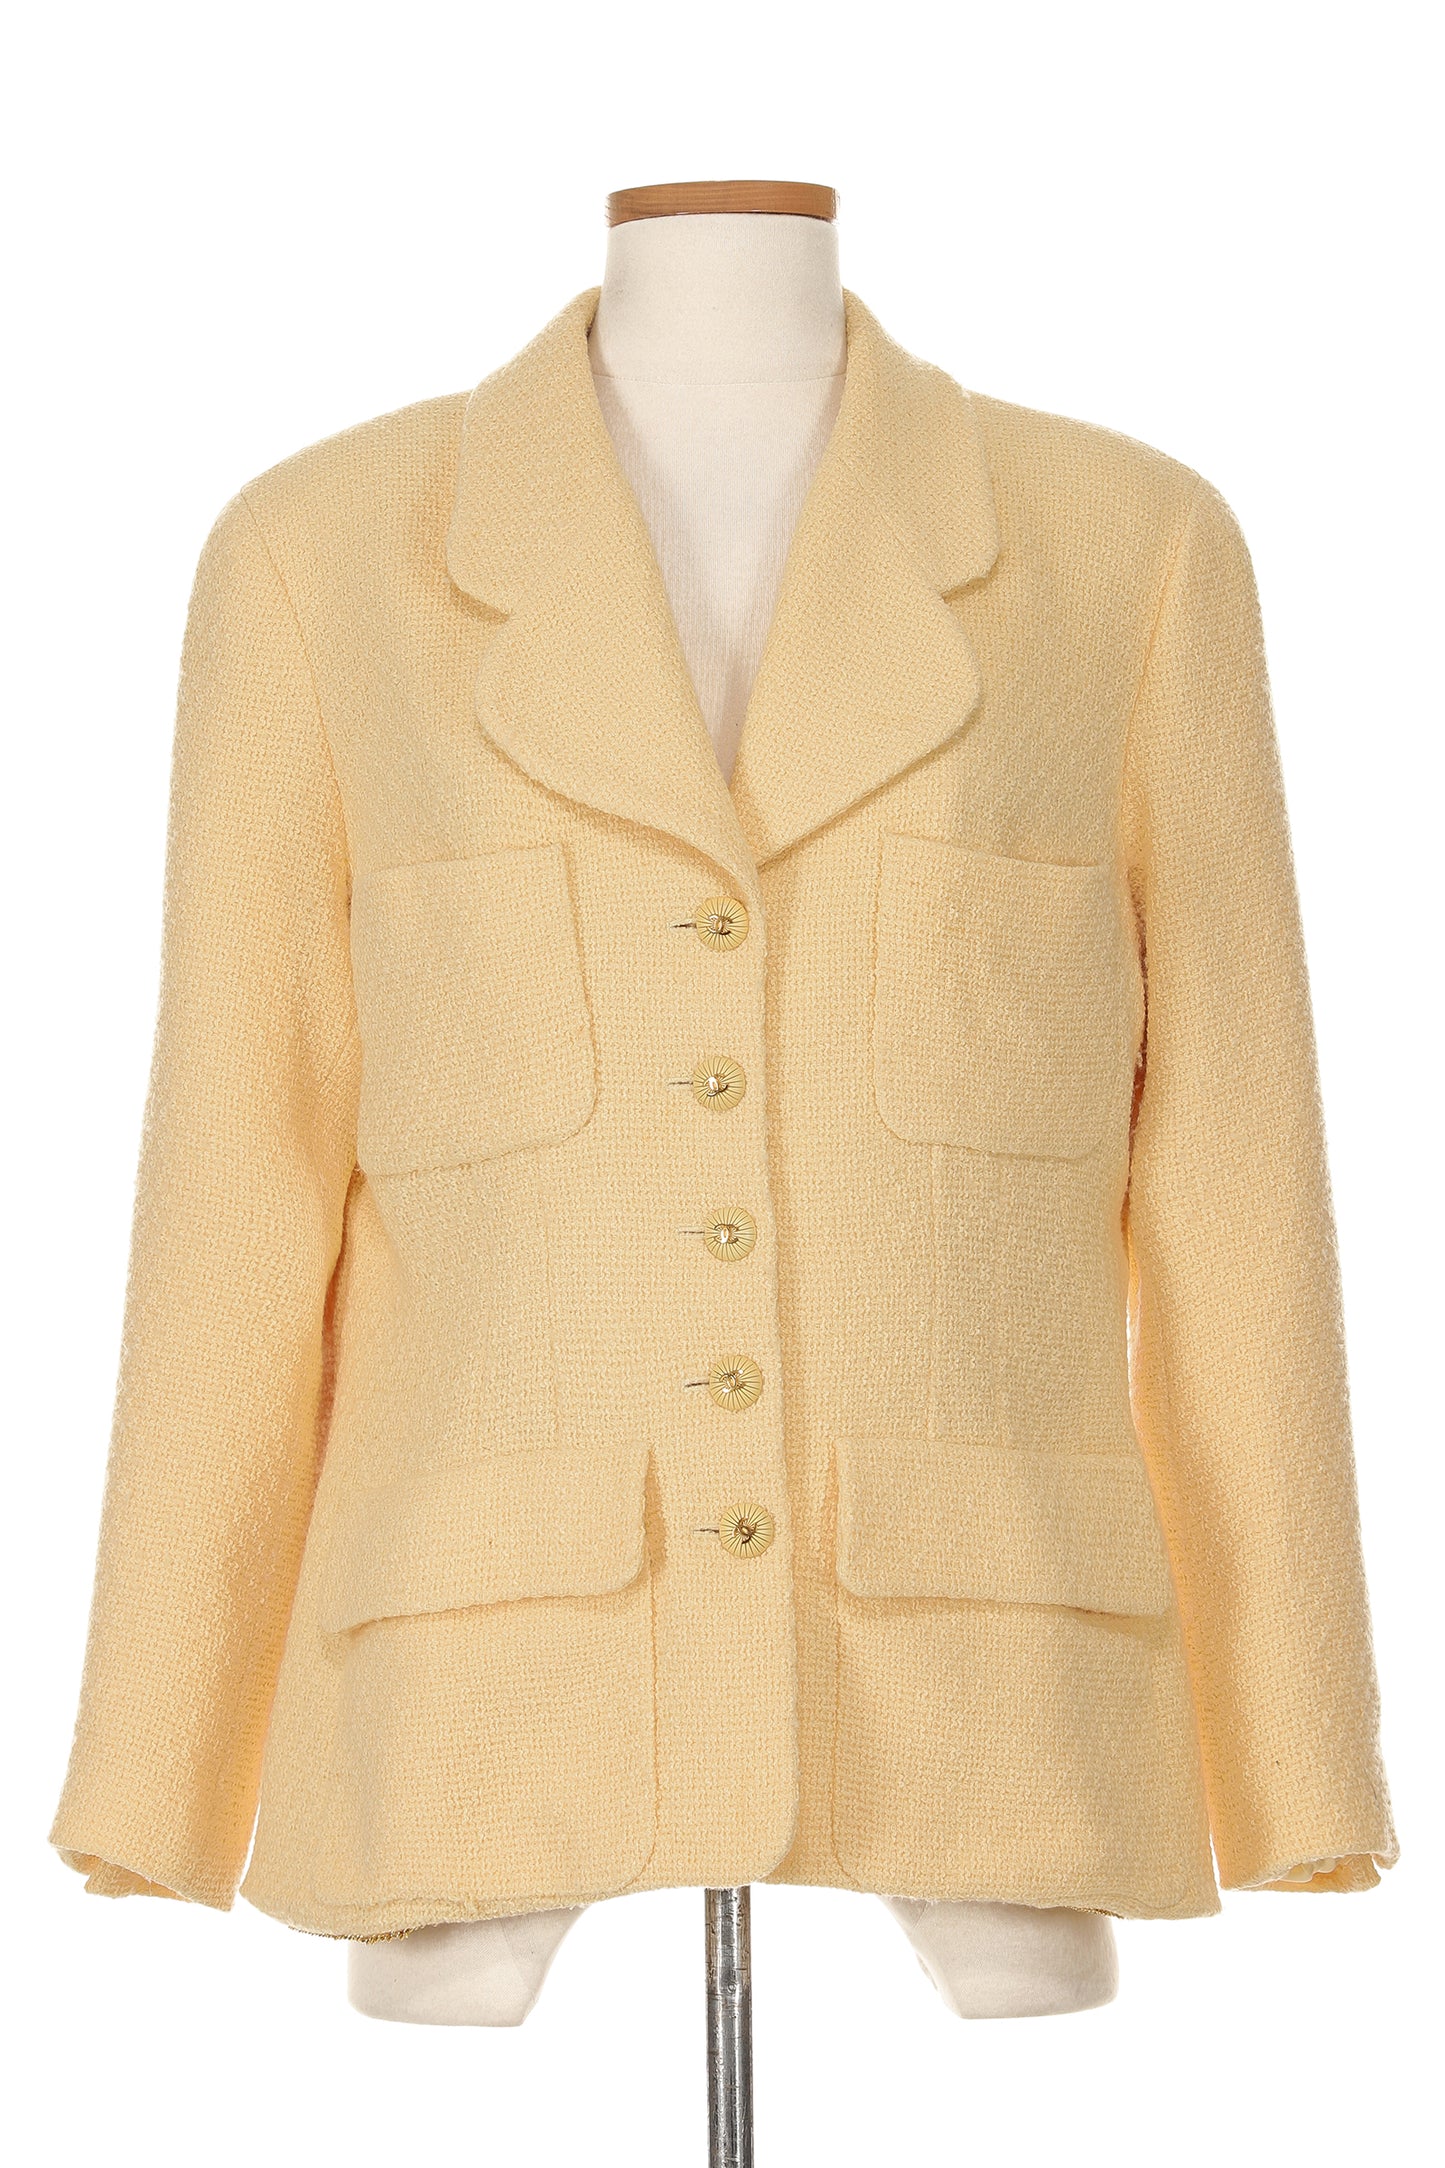 Chanel Spring 1993 Yellow Tweed Jacket